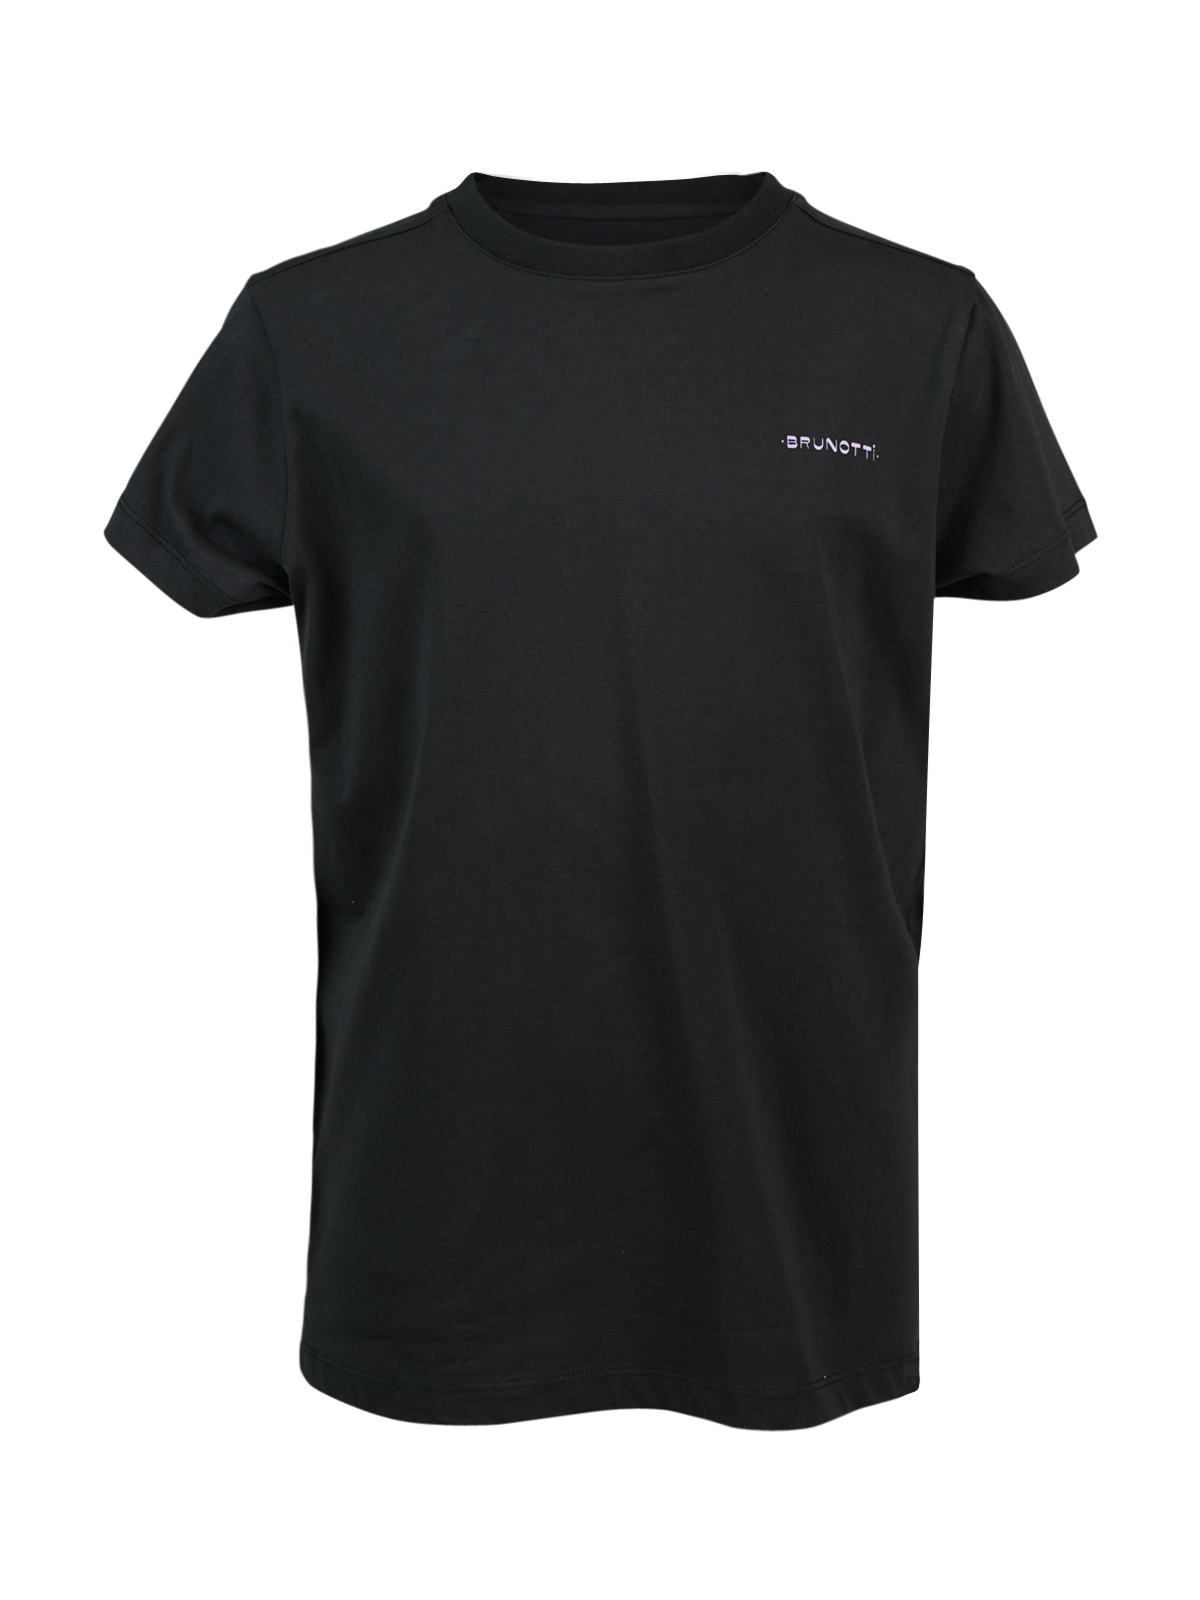 Oval-Mountainy Boys T-shirt | Black